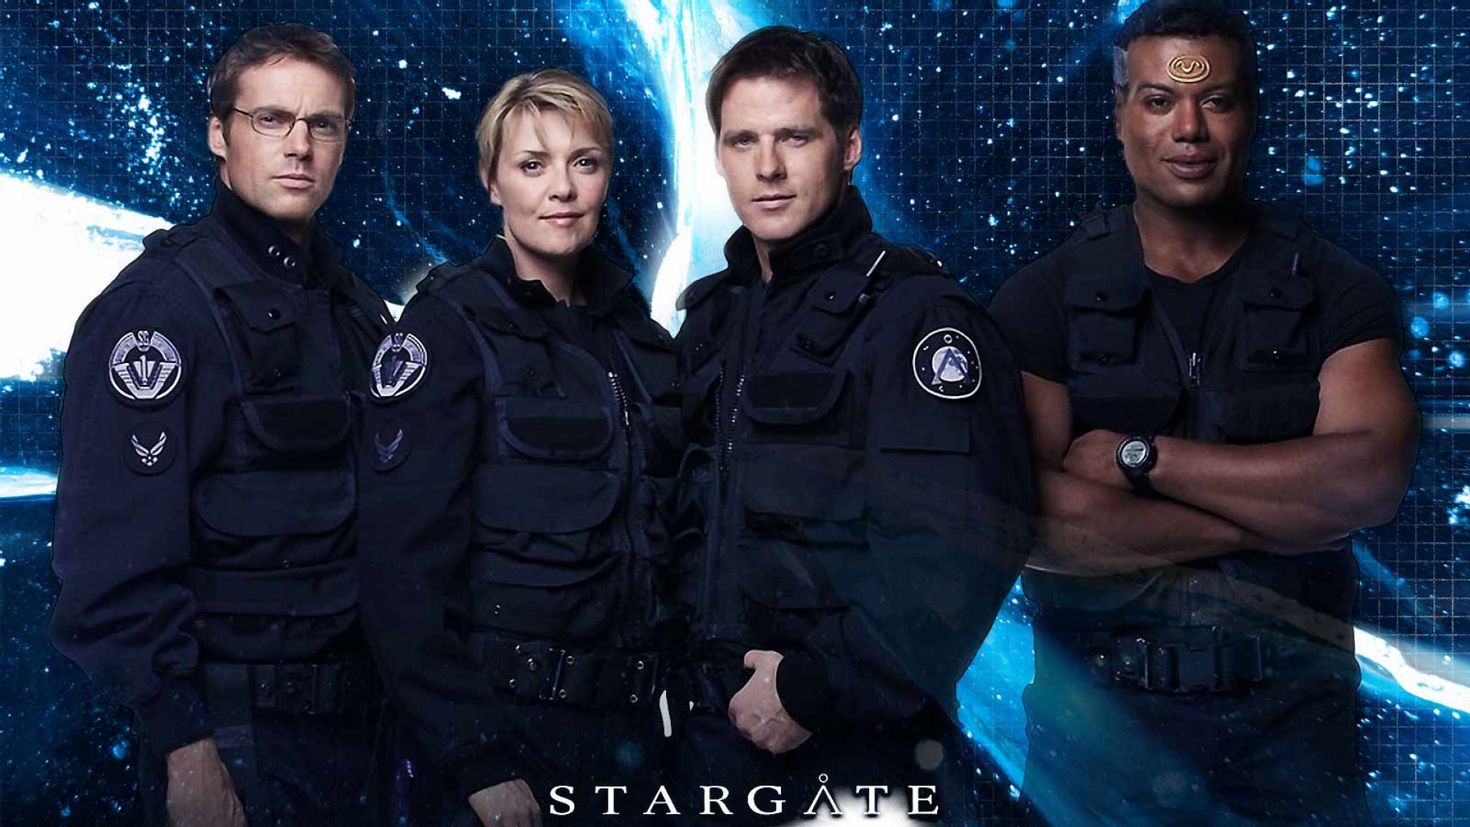 Звездные врата зв 1 4. Звёздные врата 3в-1. Stargate sg1.